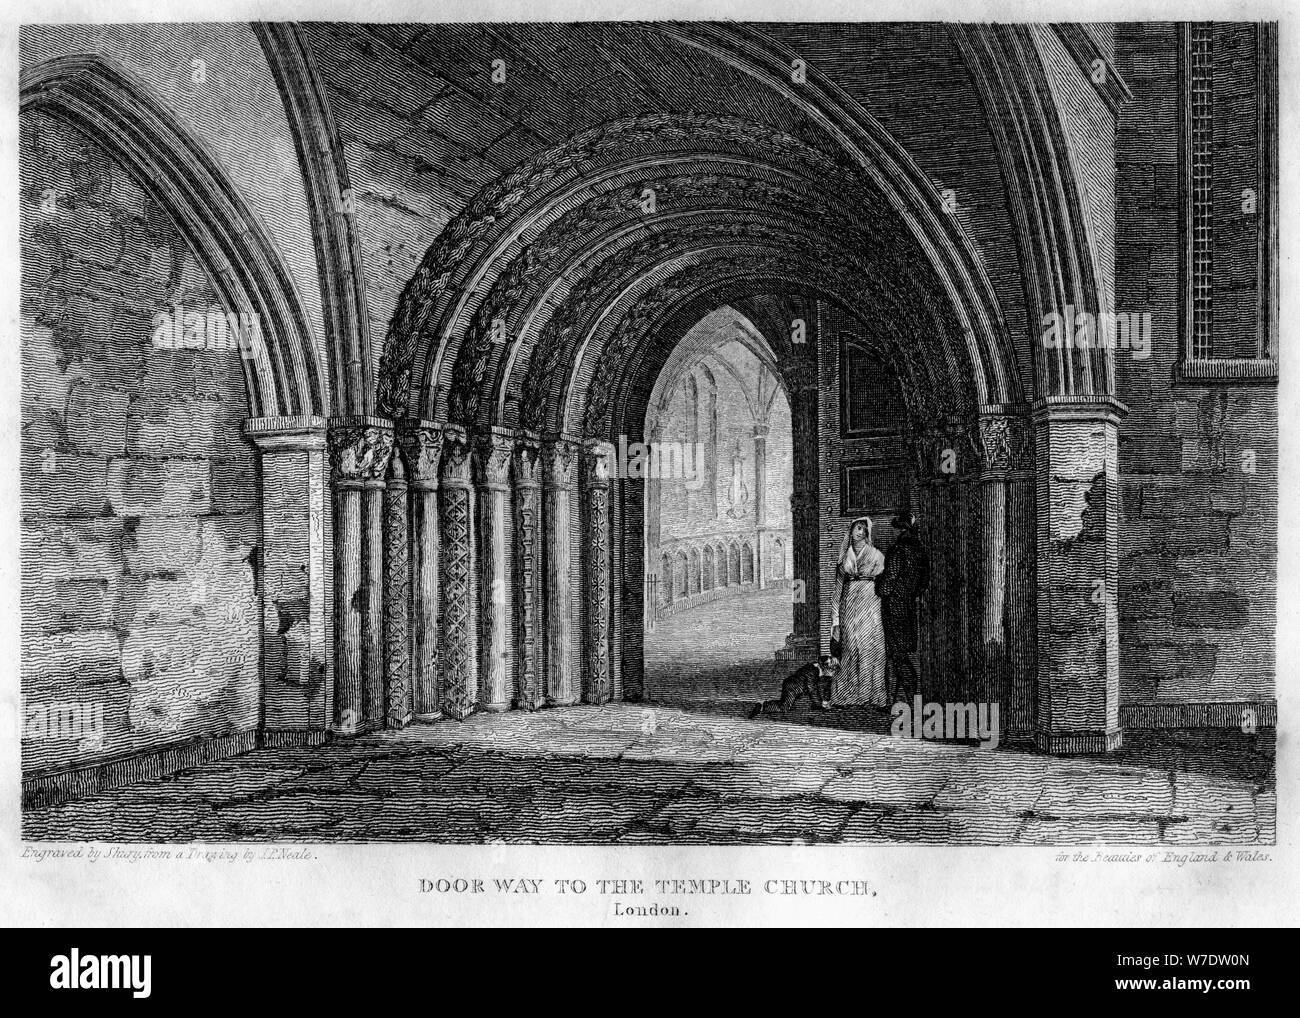 Doorway to the Temple Church, London, 1815.Artist: J Shury Stock Photo